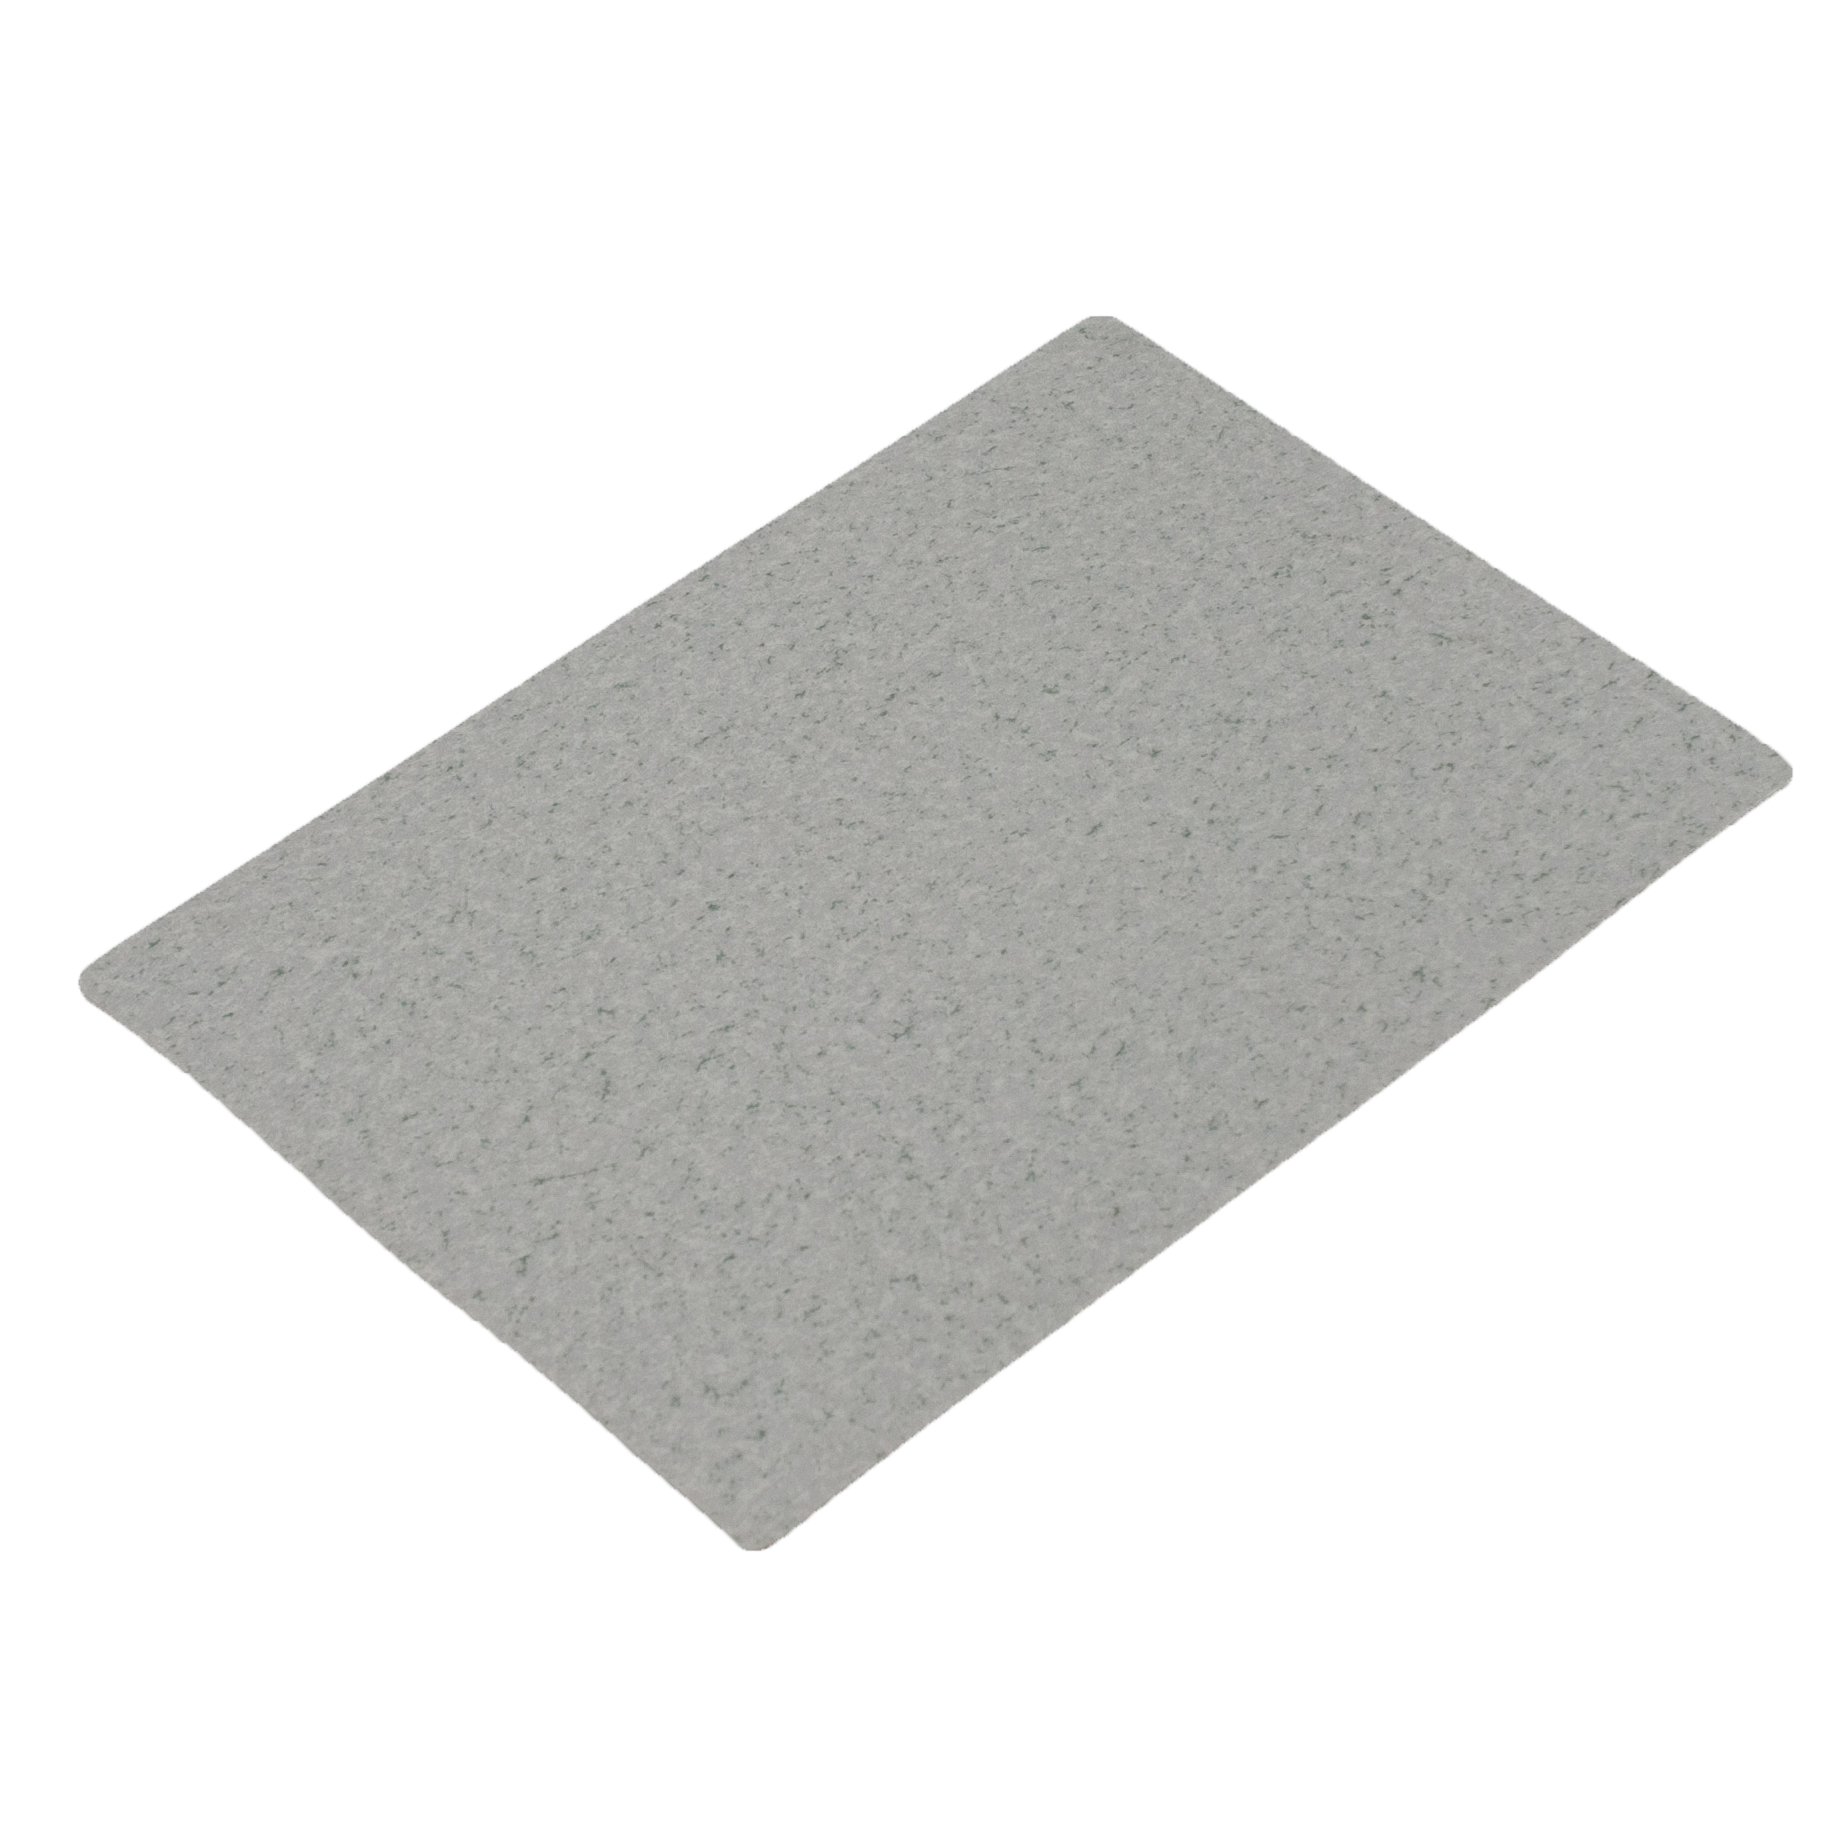 High Quality 5mm PVC Flooring For Basement